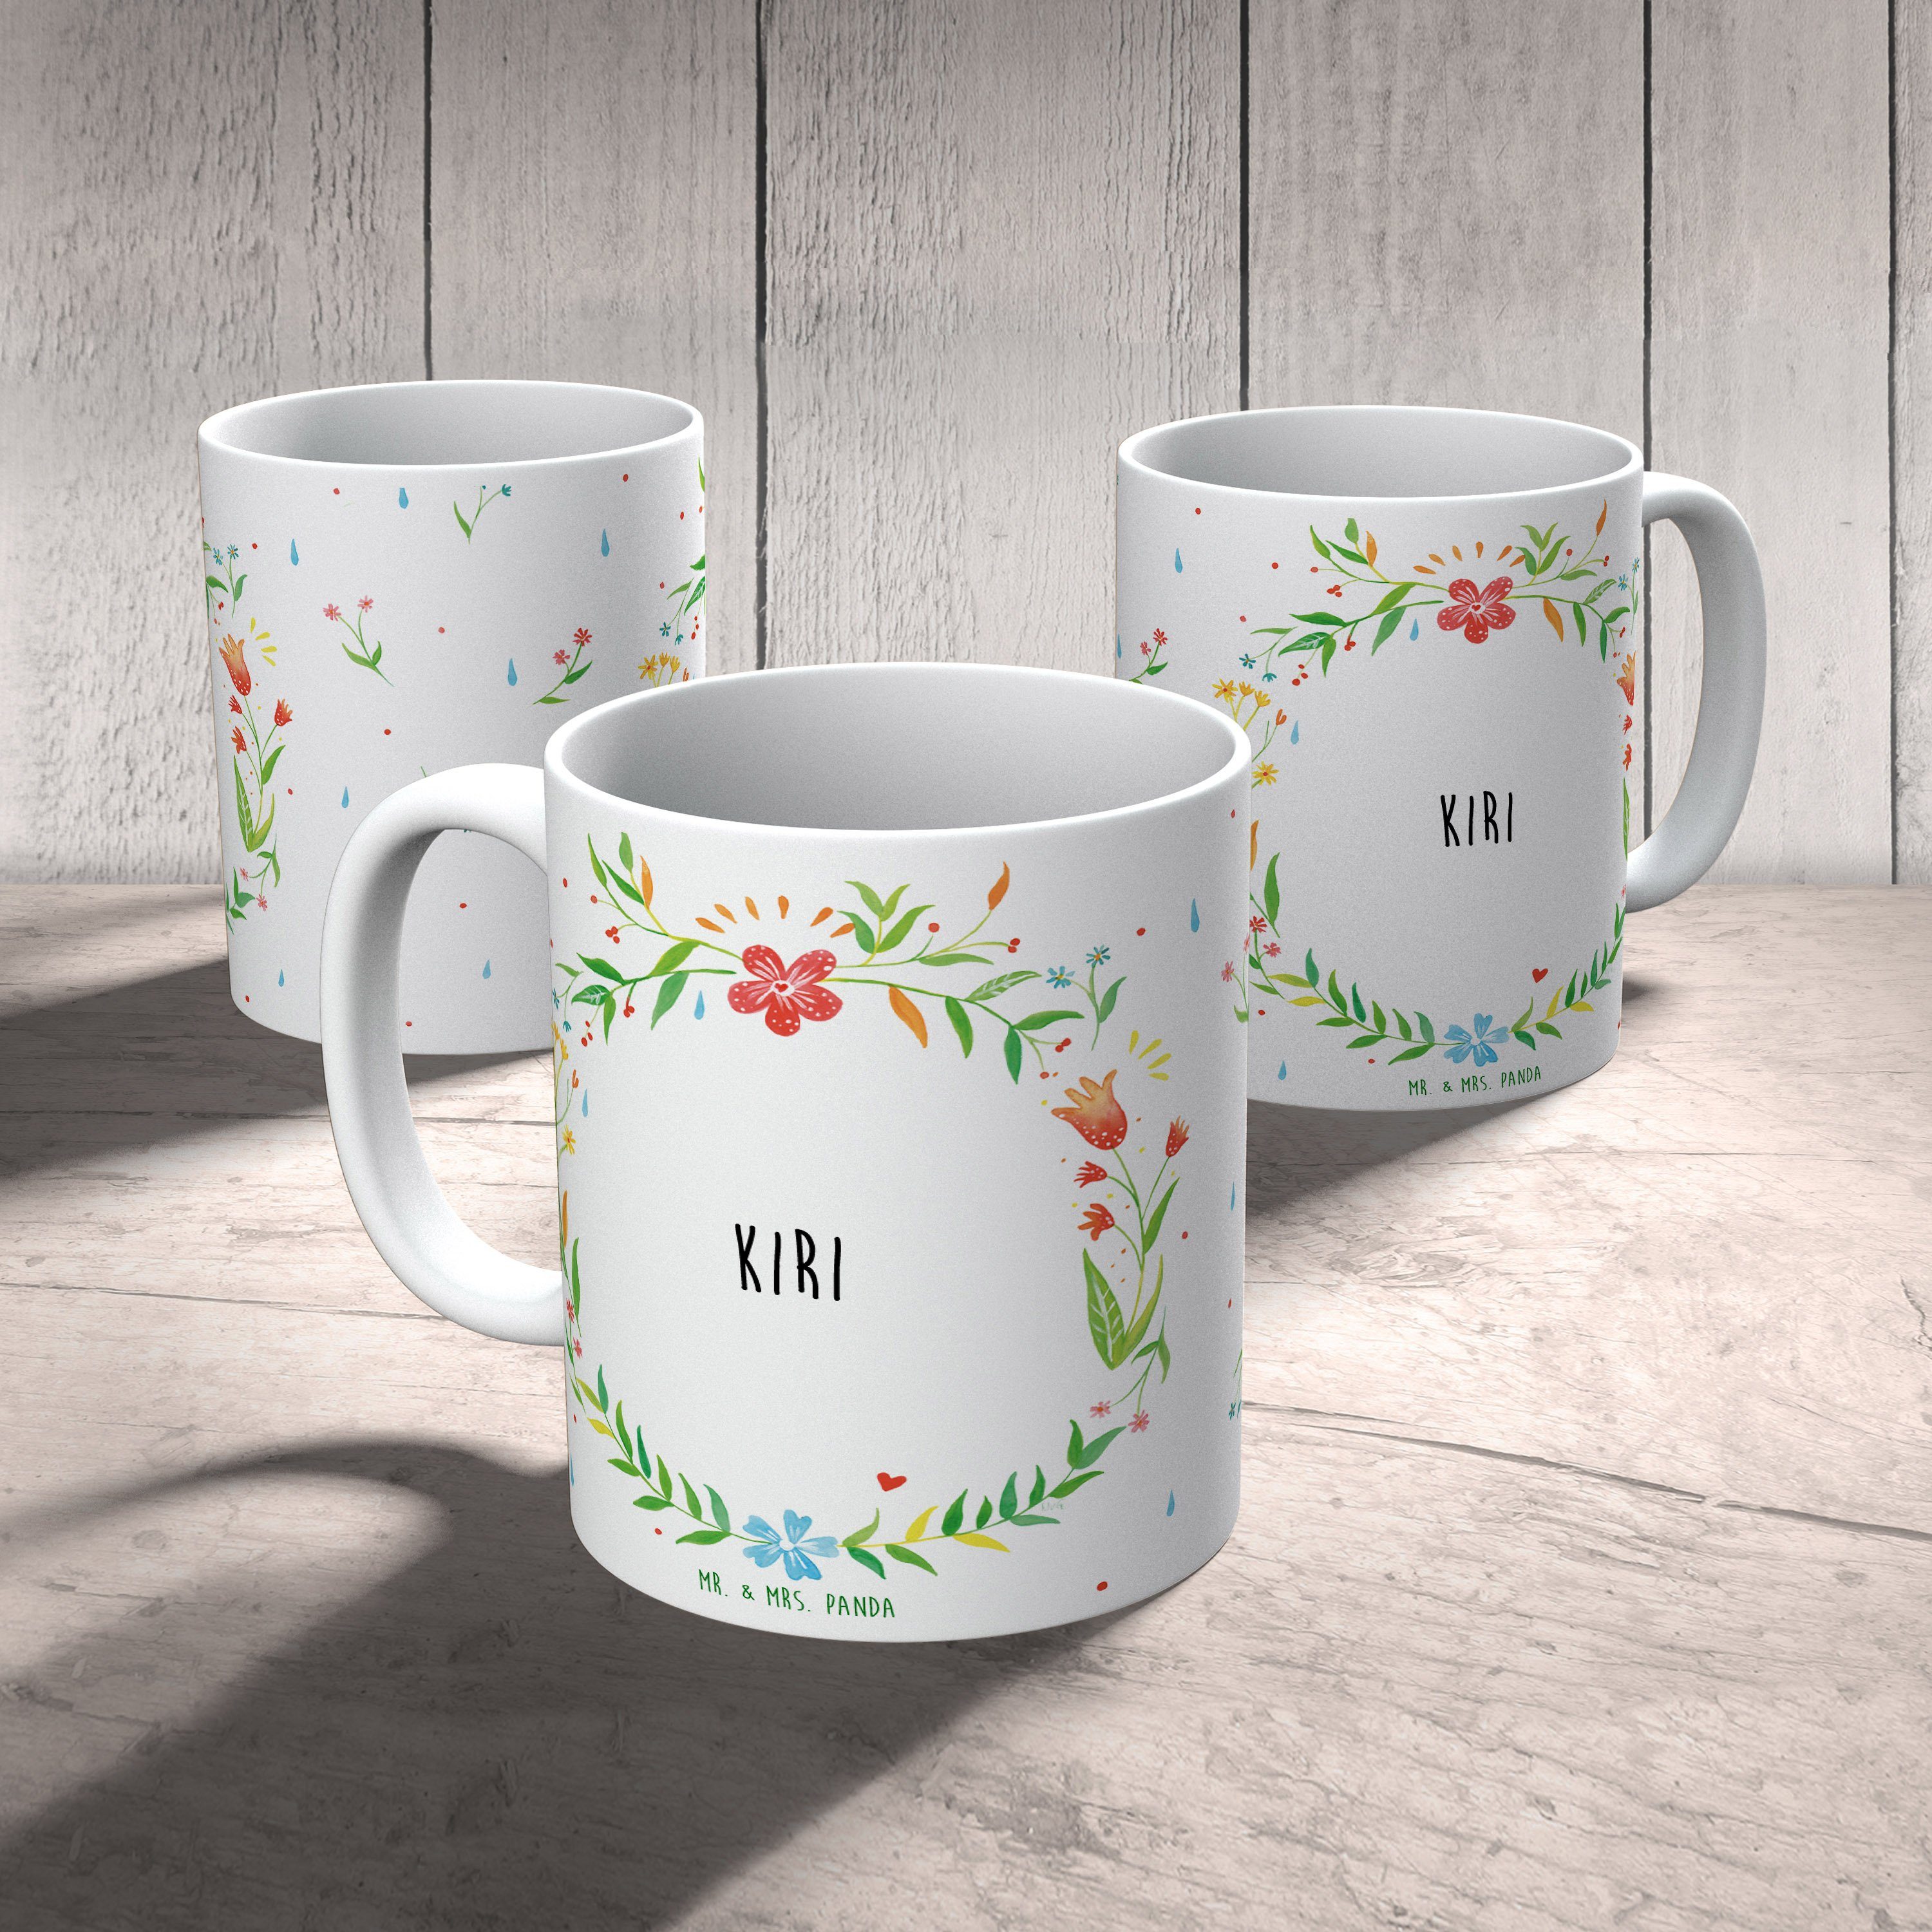 Mr. & Mrs. Geschenk Tasse, Tasse Teetasse, Tasse, Panda Keramik Kaffeebecher, Büro, Geschenk, Kiri 